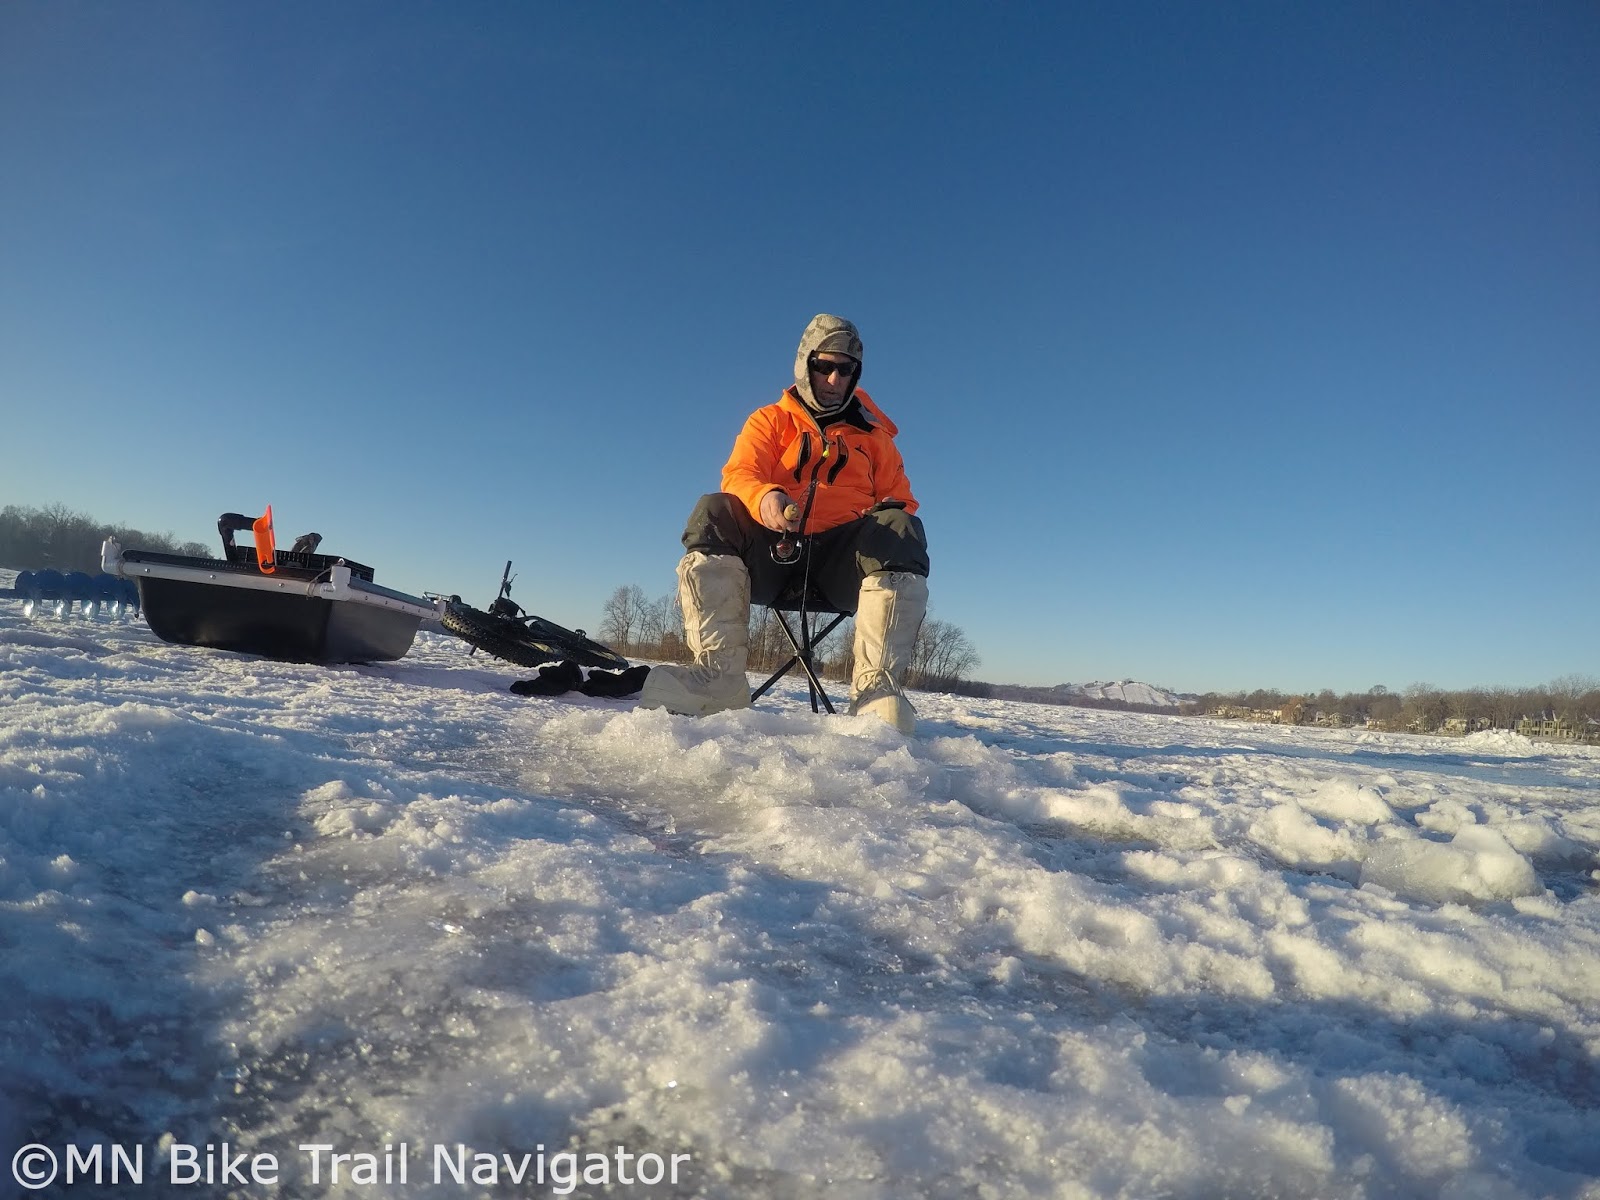 MN Bike Trail Navigator: Fatbike Ice Fishing and How to Do It